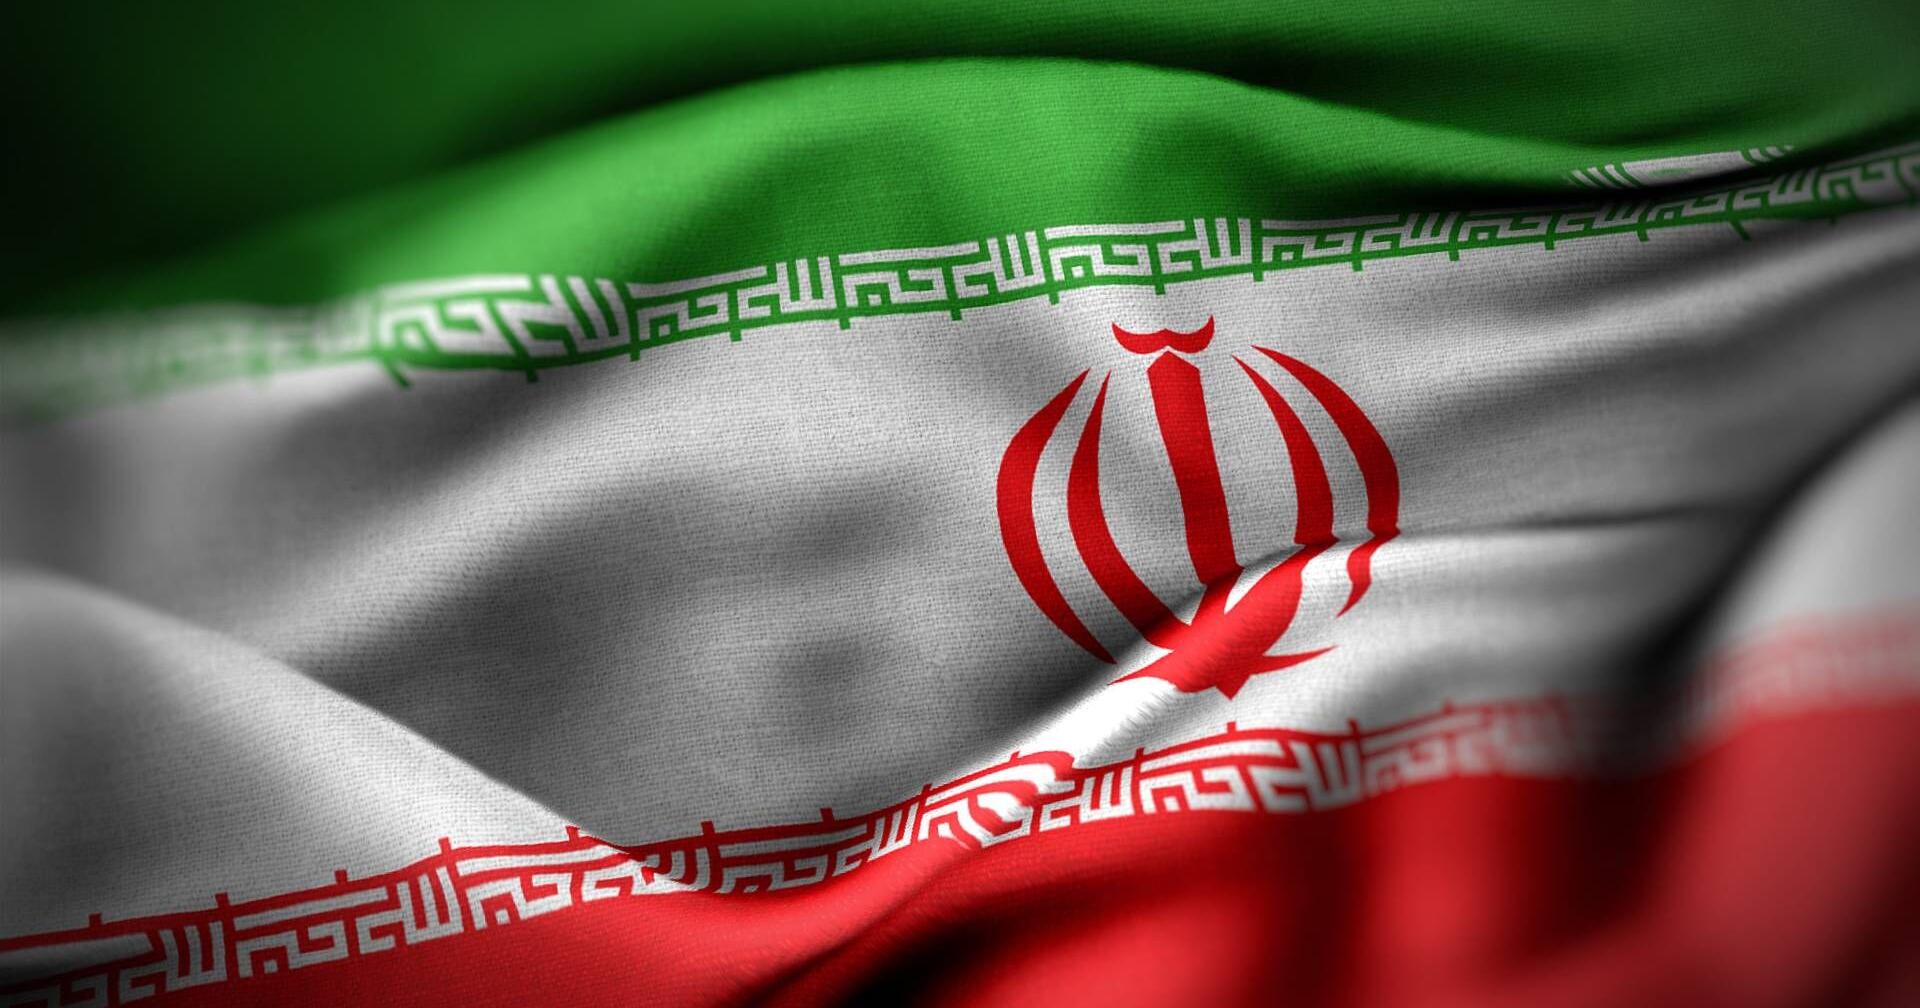 iran–united states relations